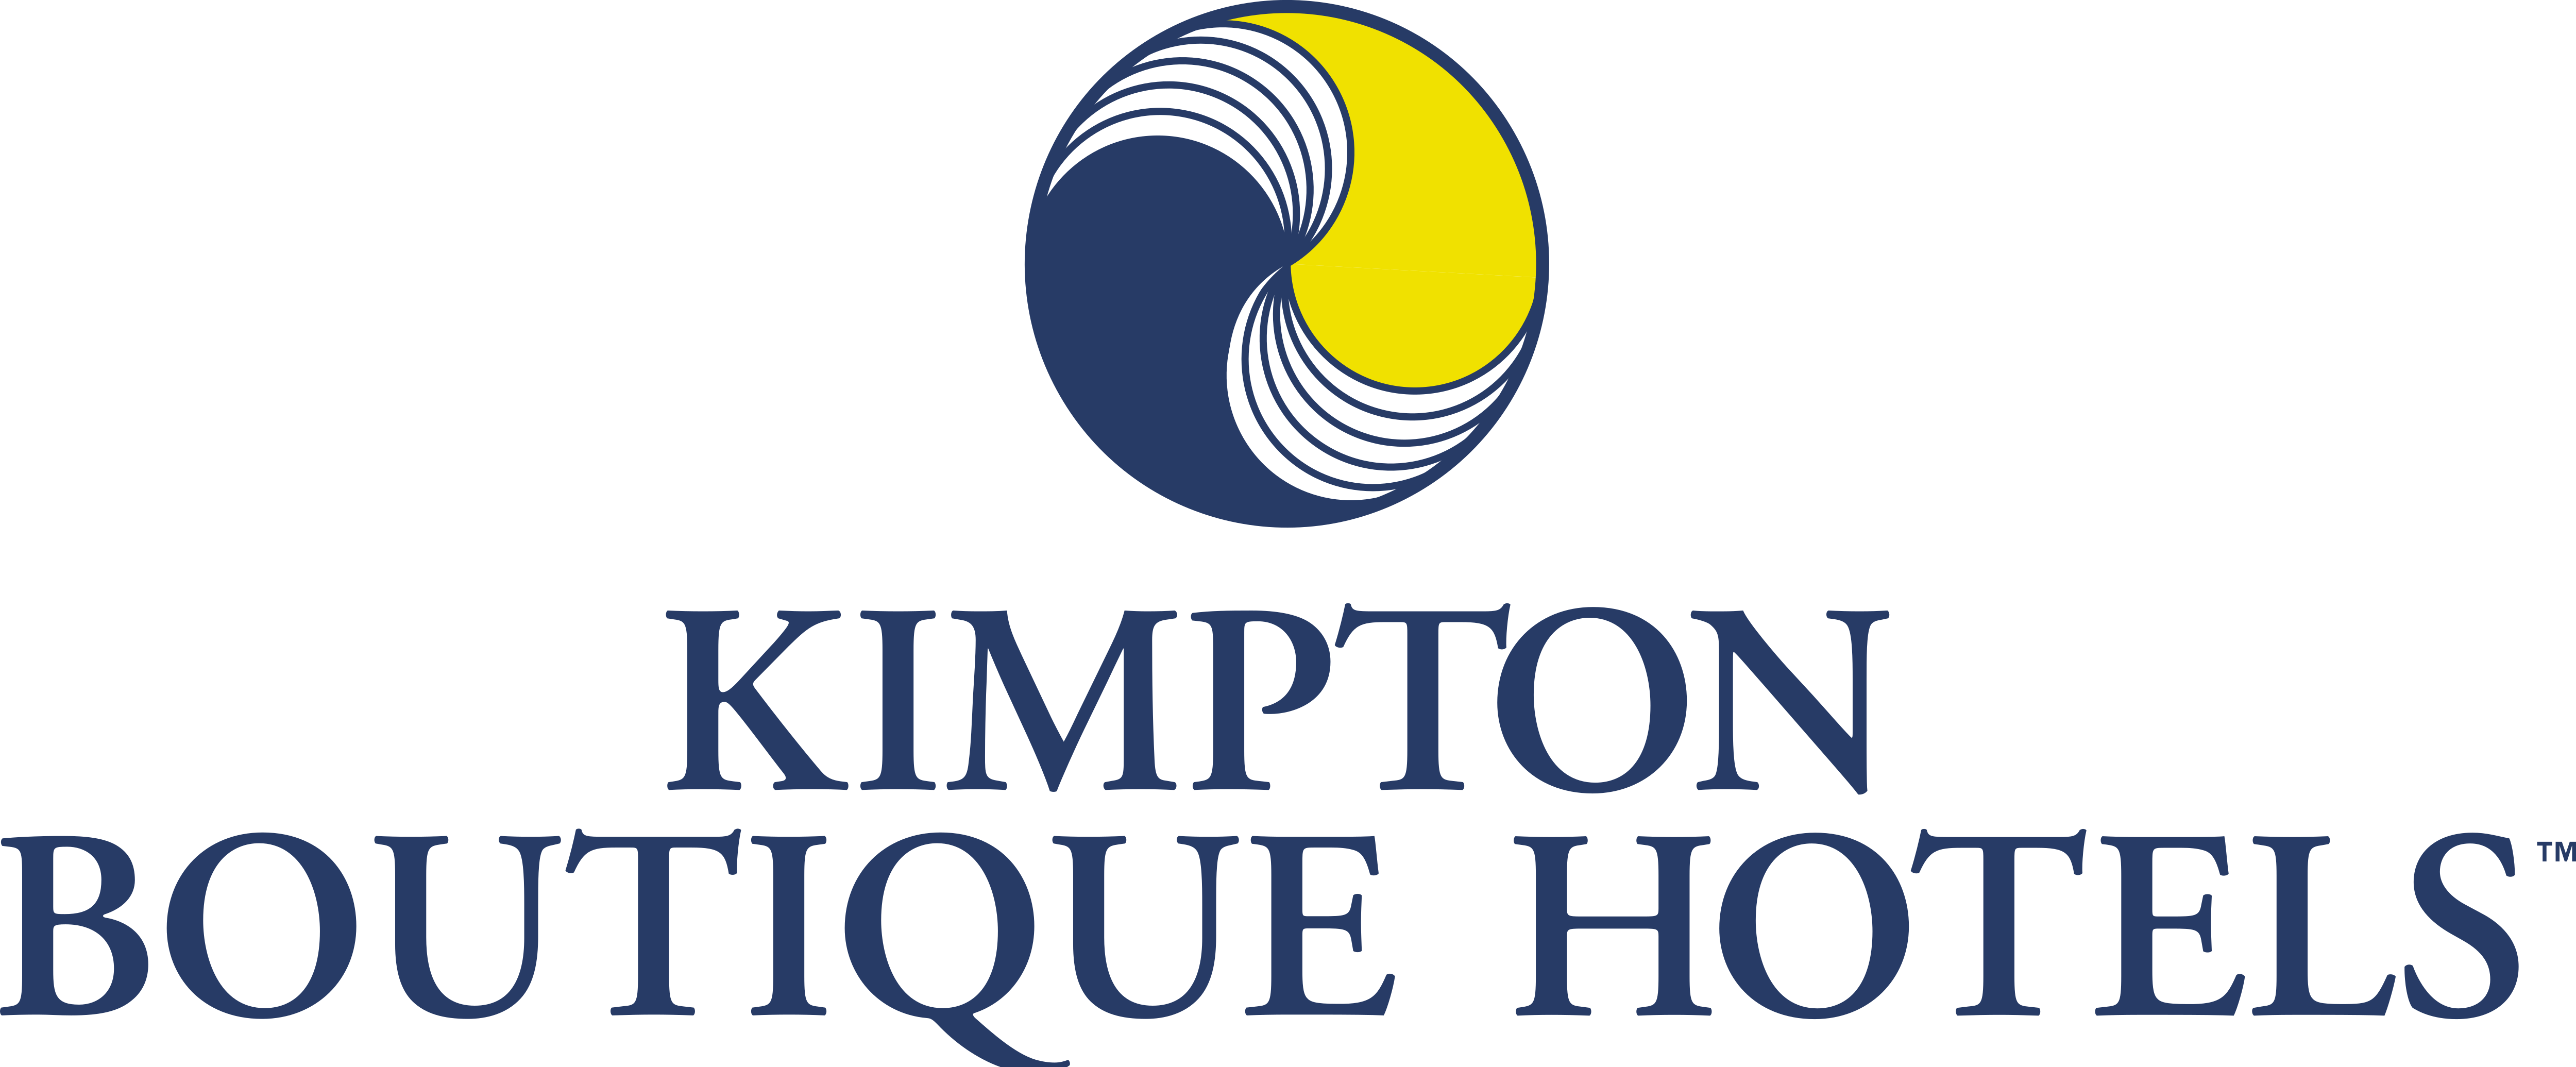 Kimpton Boutique Hotels Logo 